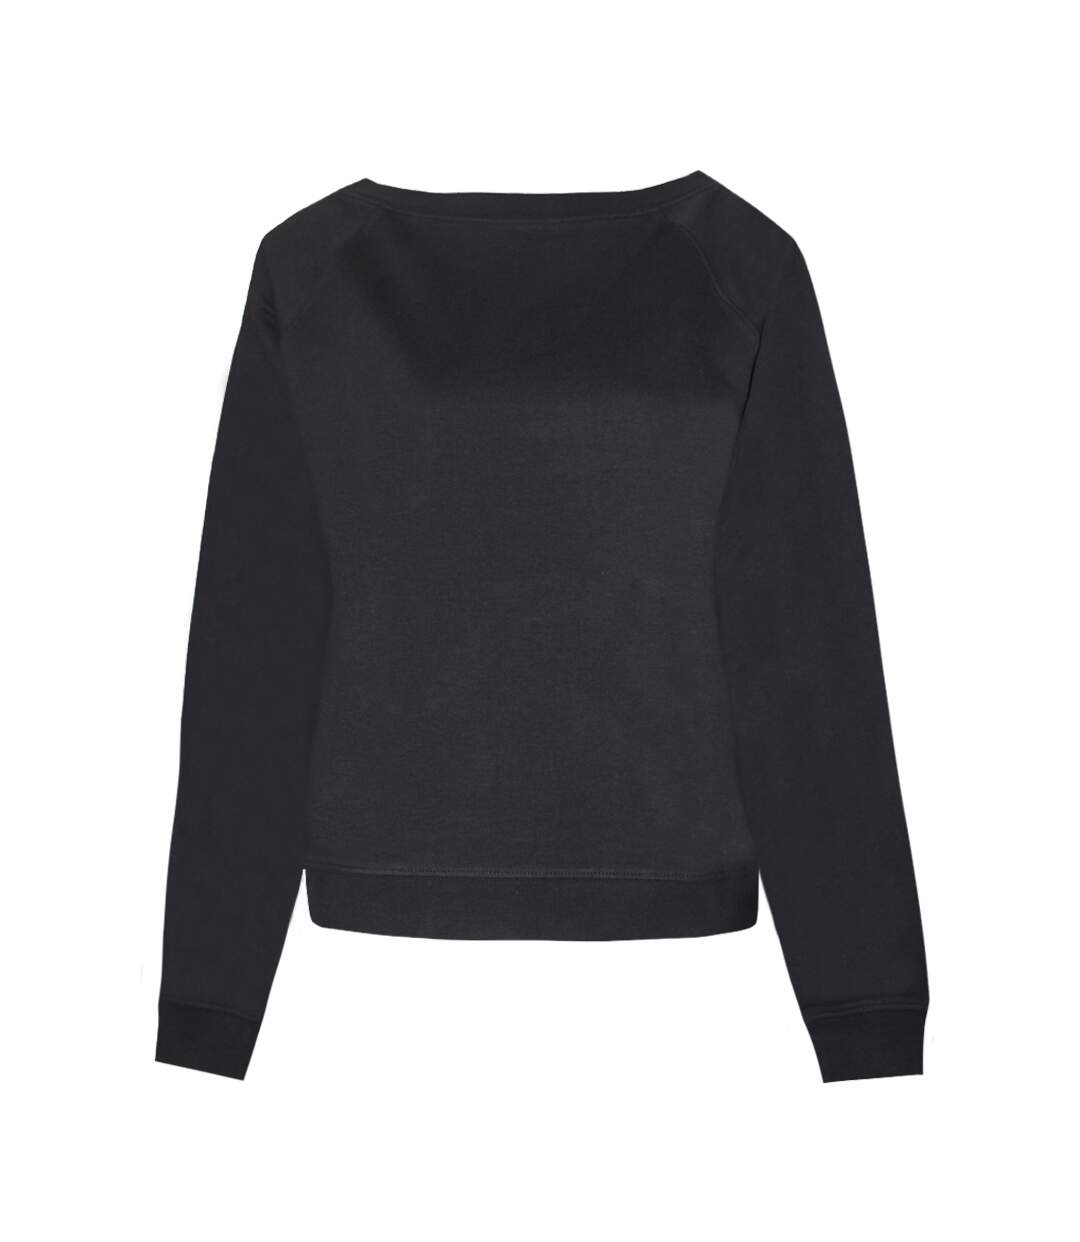 Skinni Fit - Sweatshirt 100% coton - Femme (Noir) - UTRW1382